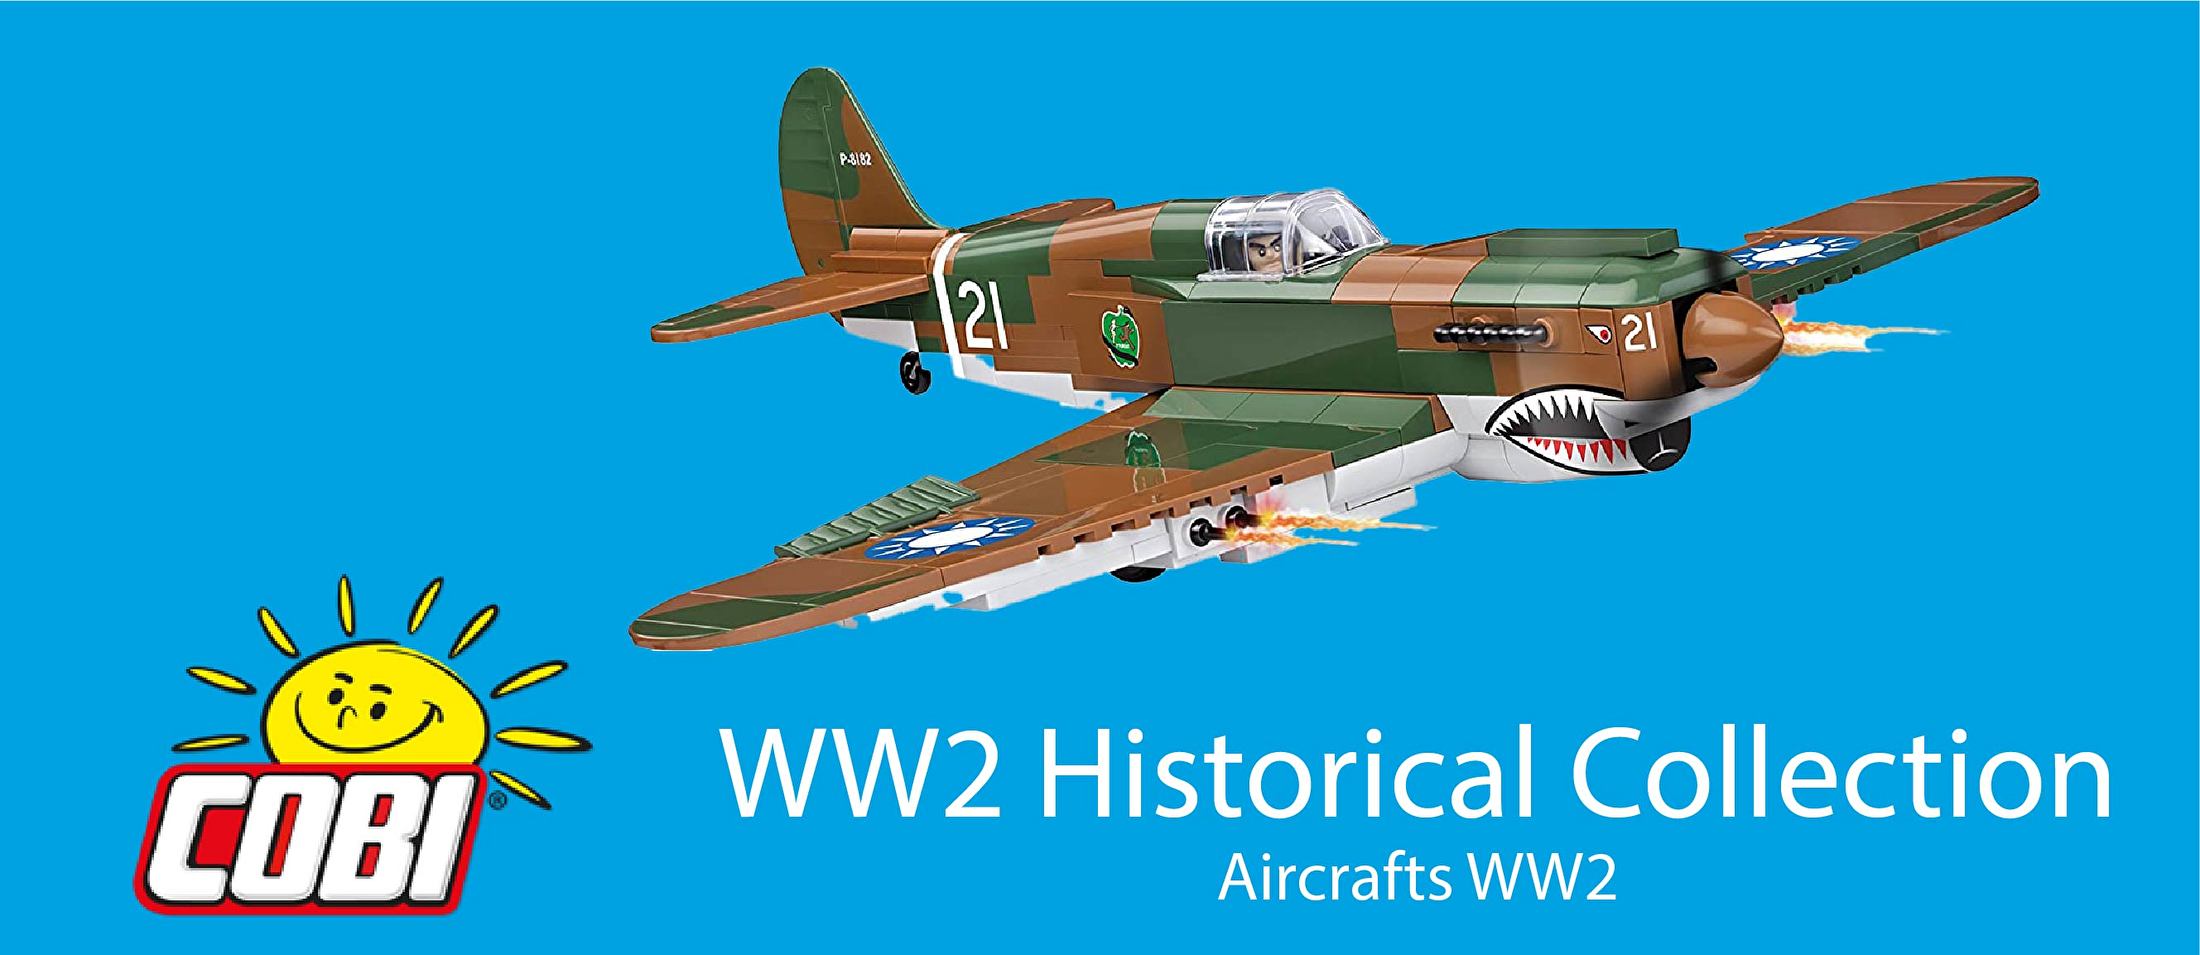 Aircrafts WW2